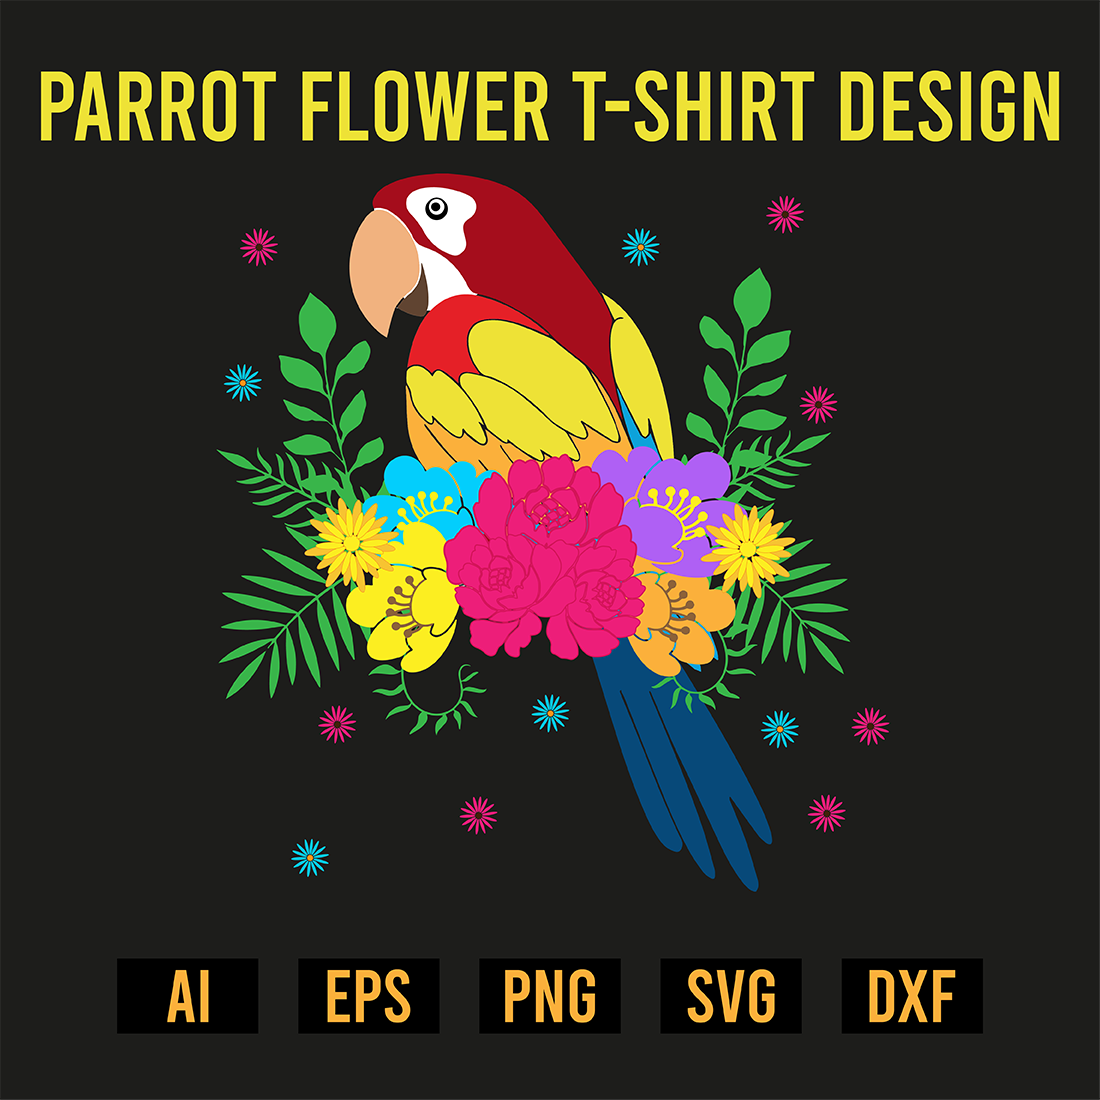 Parrot Flower T-Shirt Design preview image.